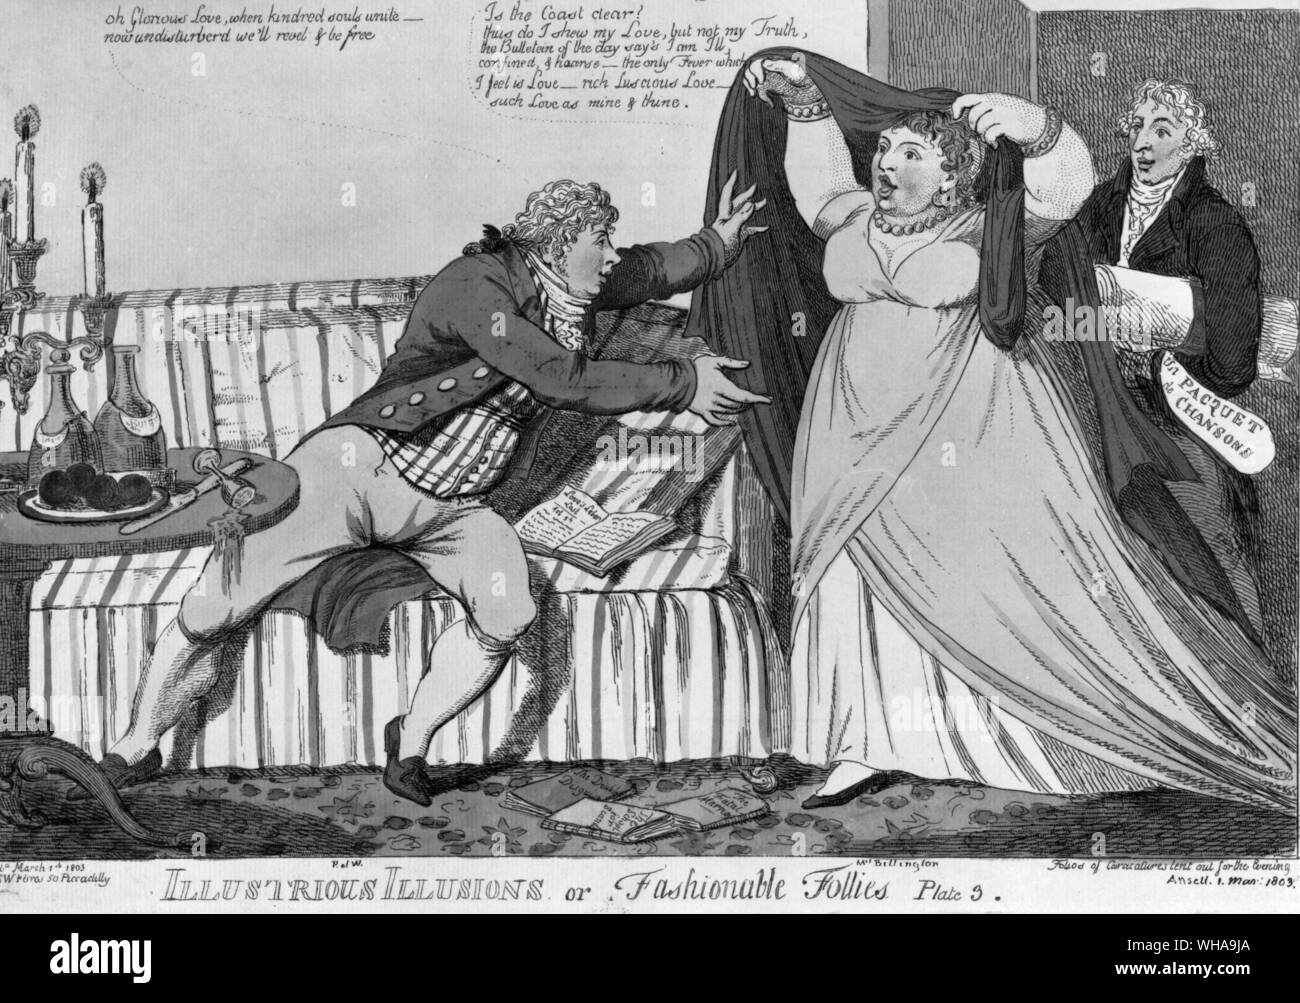 Illustrious illusions or Fashionable Follies. 1803 Ansell Stock Photo